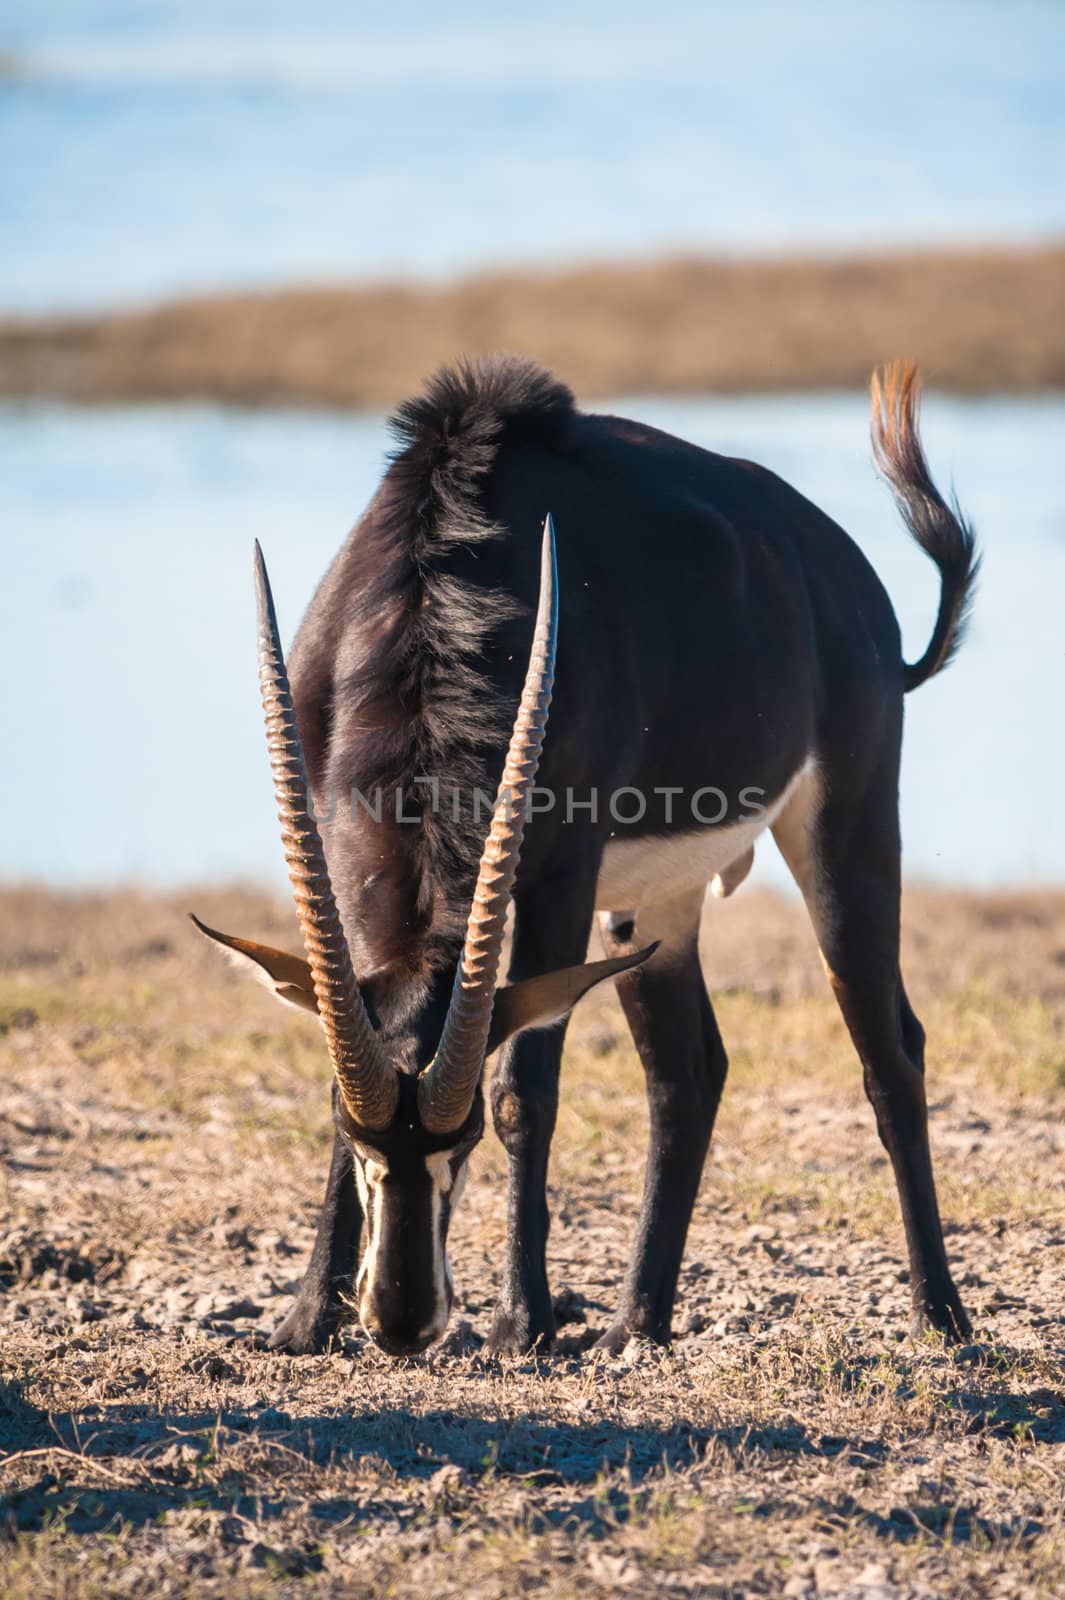 Oryx by water by edan